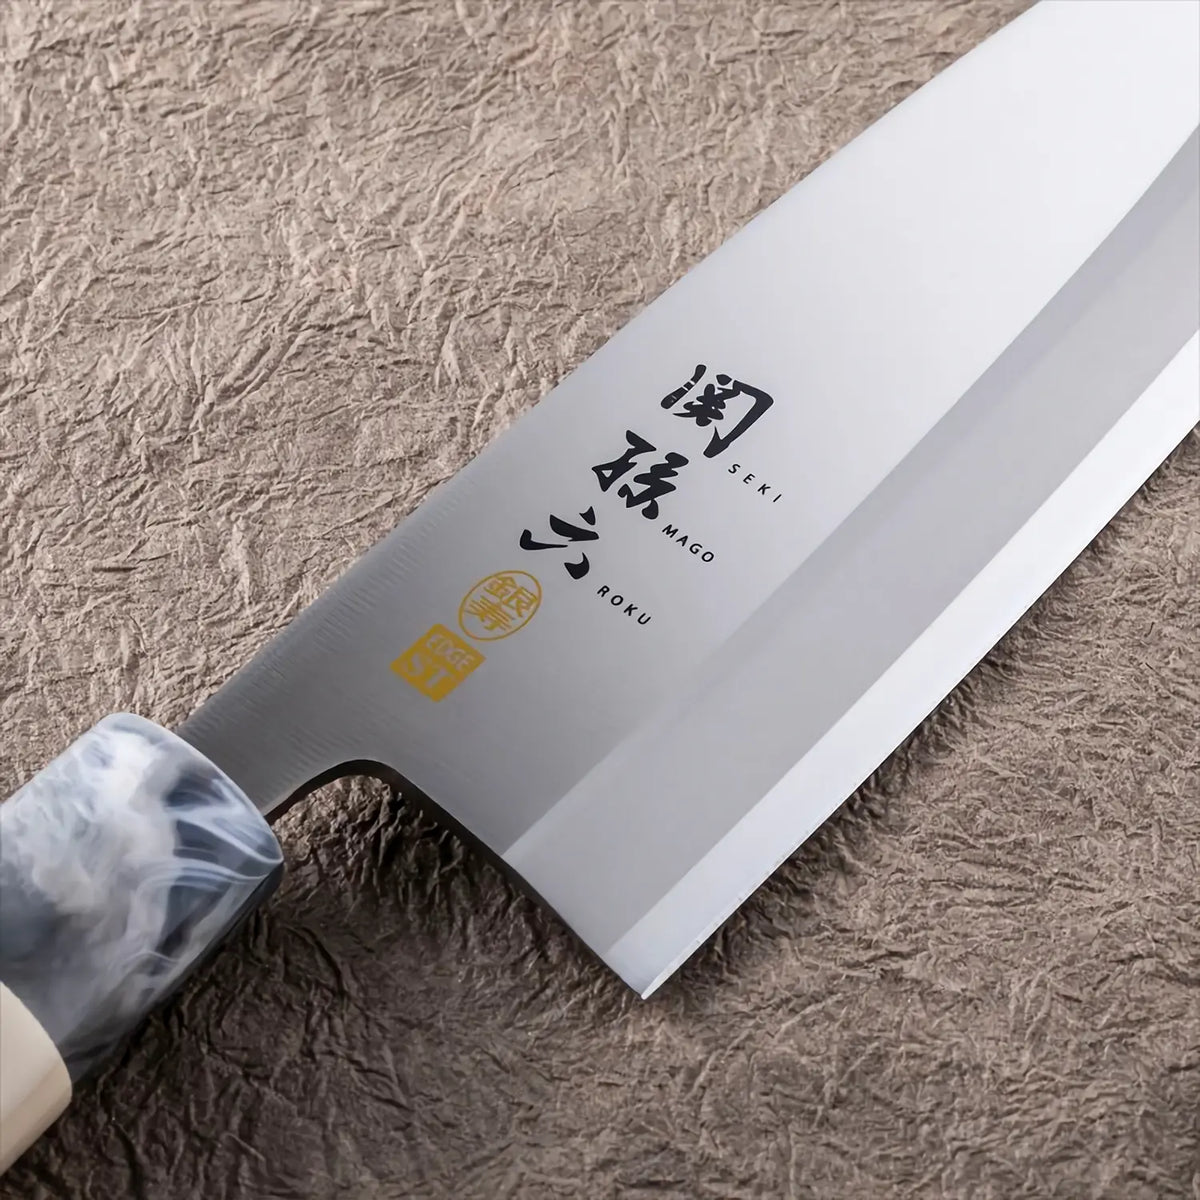 Seki Magoroku Ginju ST Stainless Steel Deba Knife